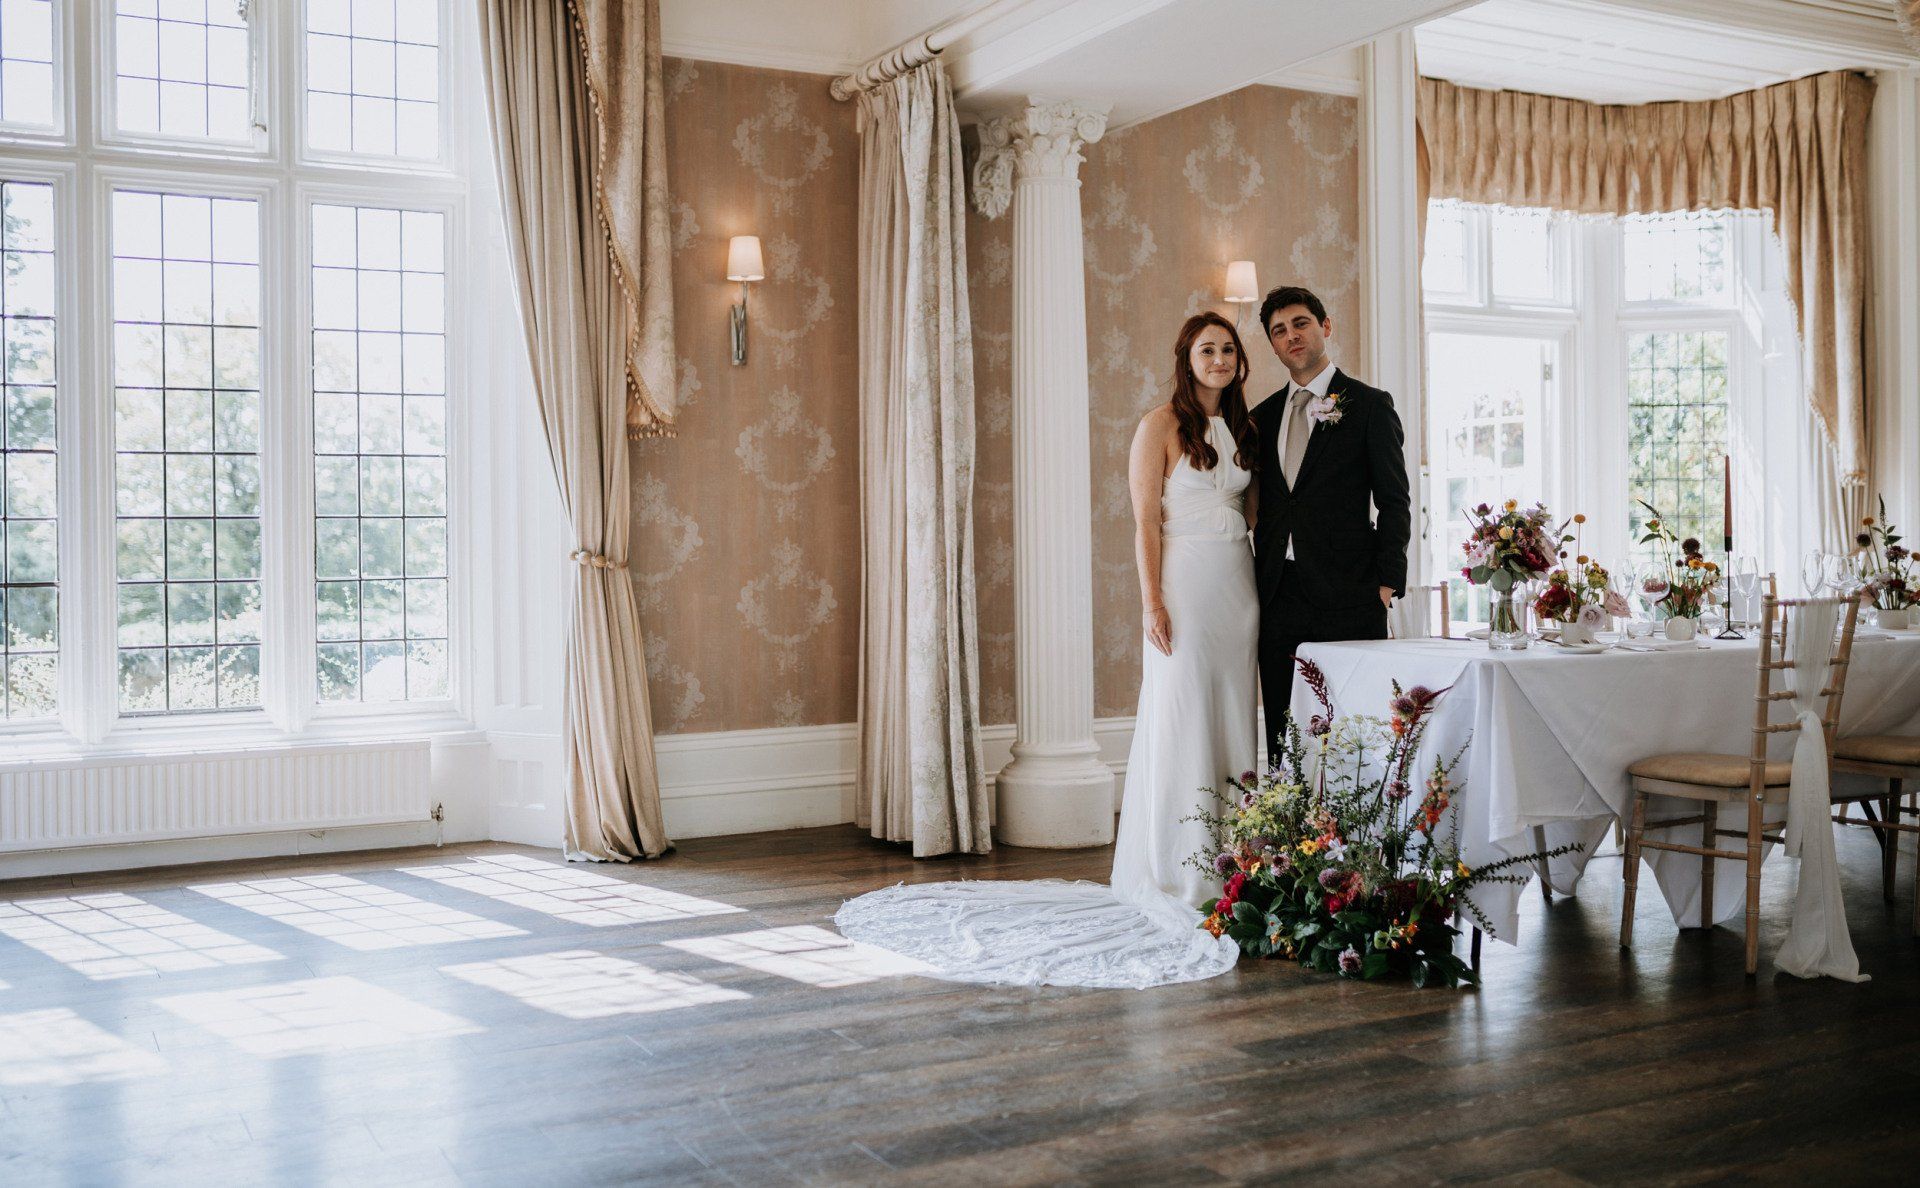 Falcon Manor Wedding Photography by Lancashire Lee Parkinson